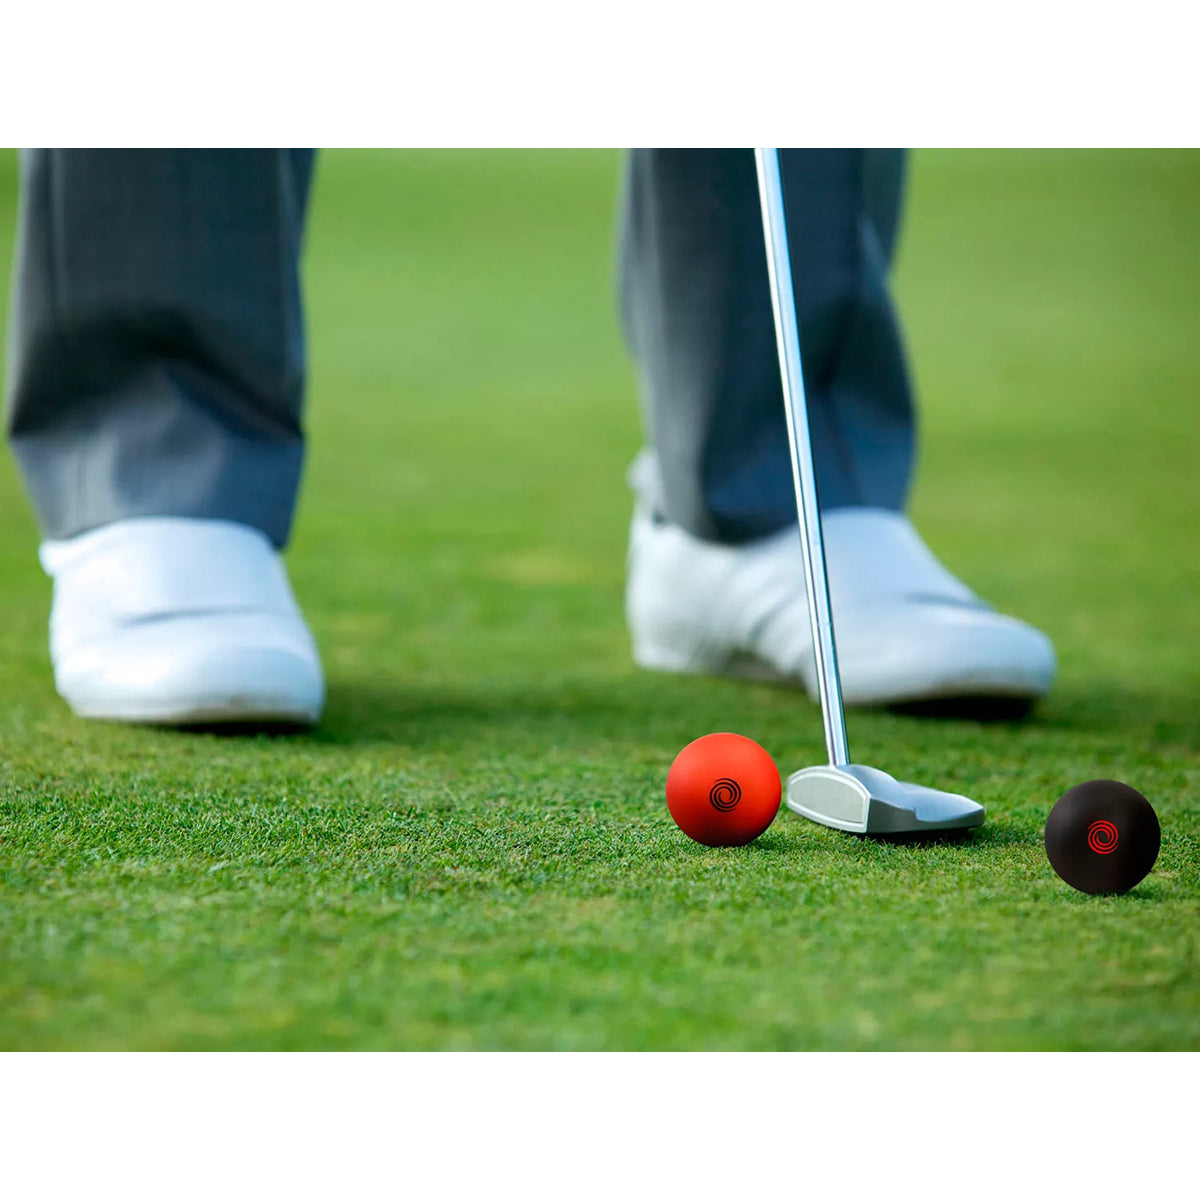 Odyssey Weighted Golf Putt Balls - 2-Pack - Red/Black Odyssey